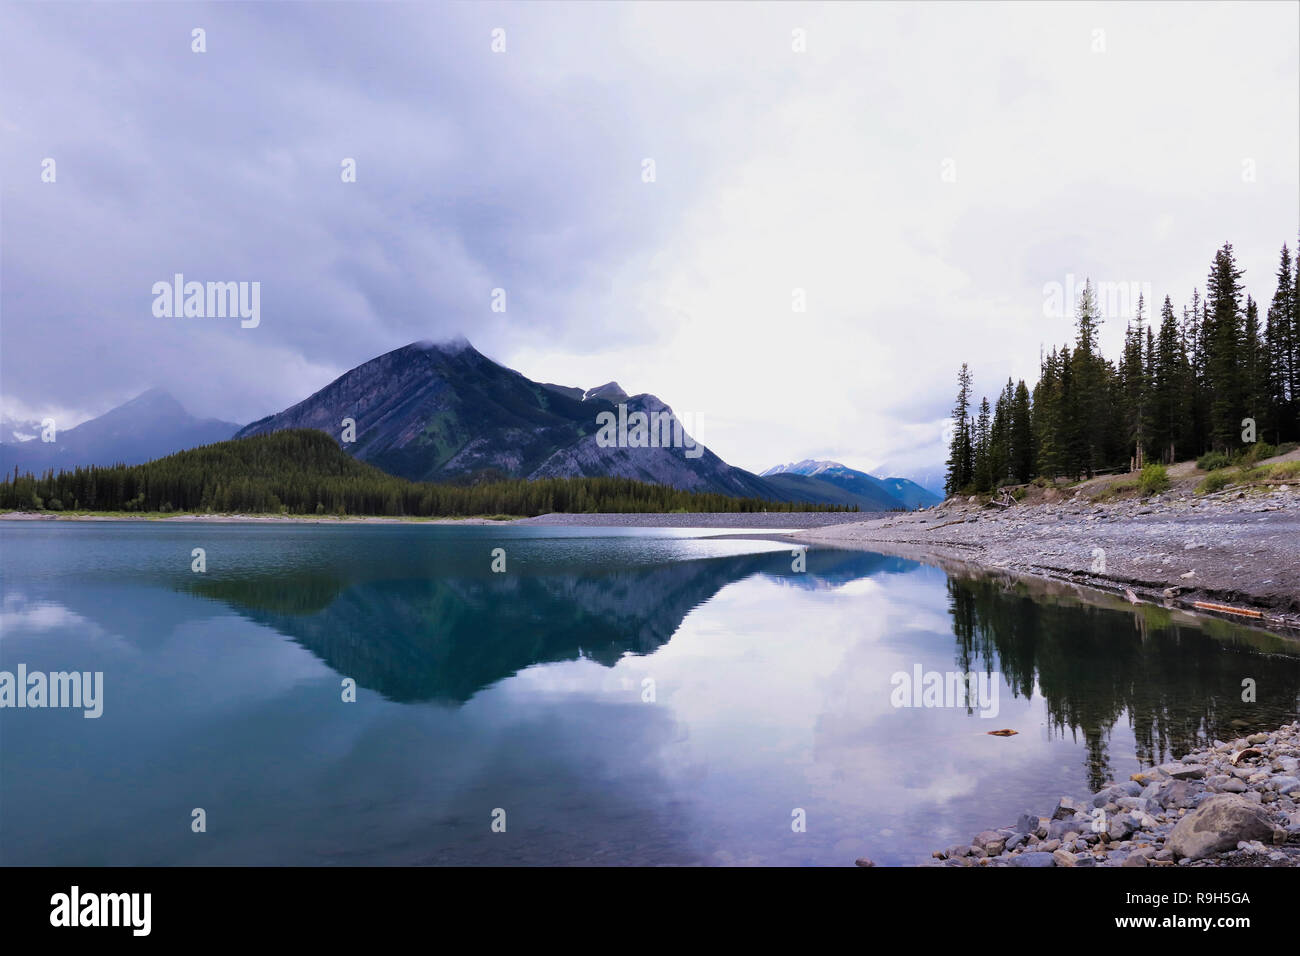 Upper Kananaskis Lake, Alberta, Canada - Rocky Mountains reflected in the turquoise lake. Canadian landscape Stock Photo